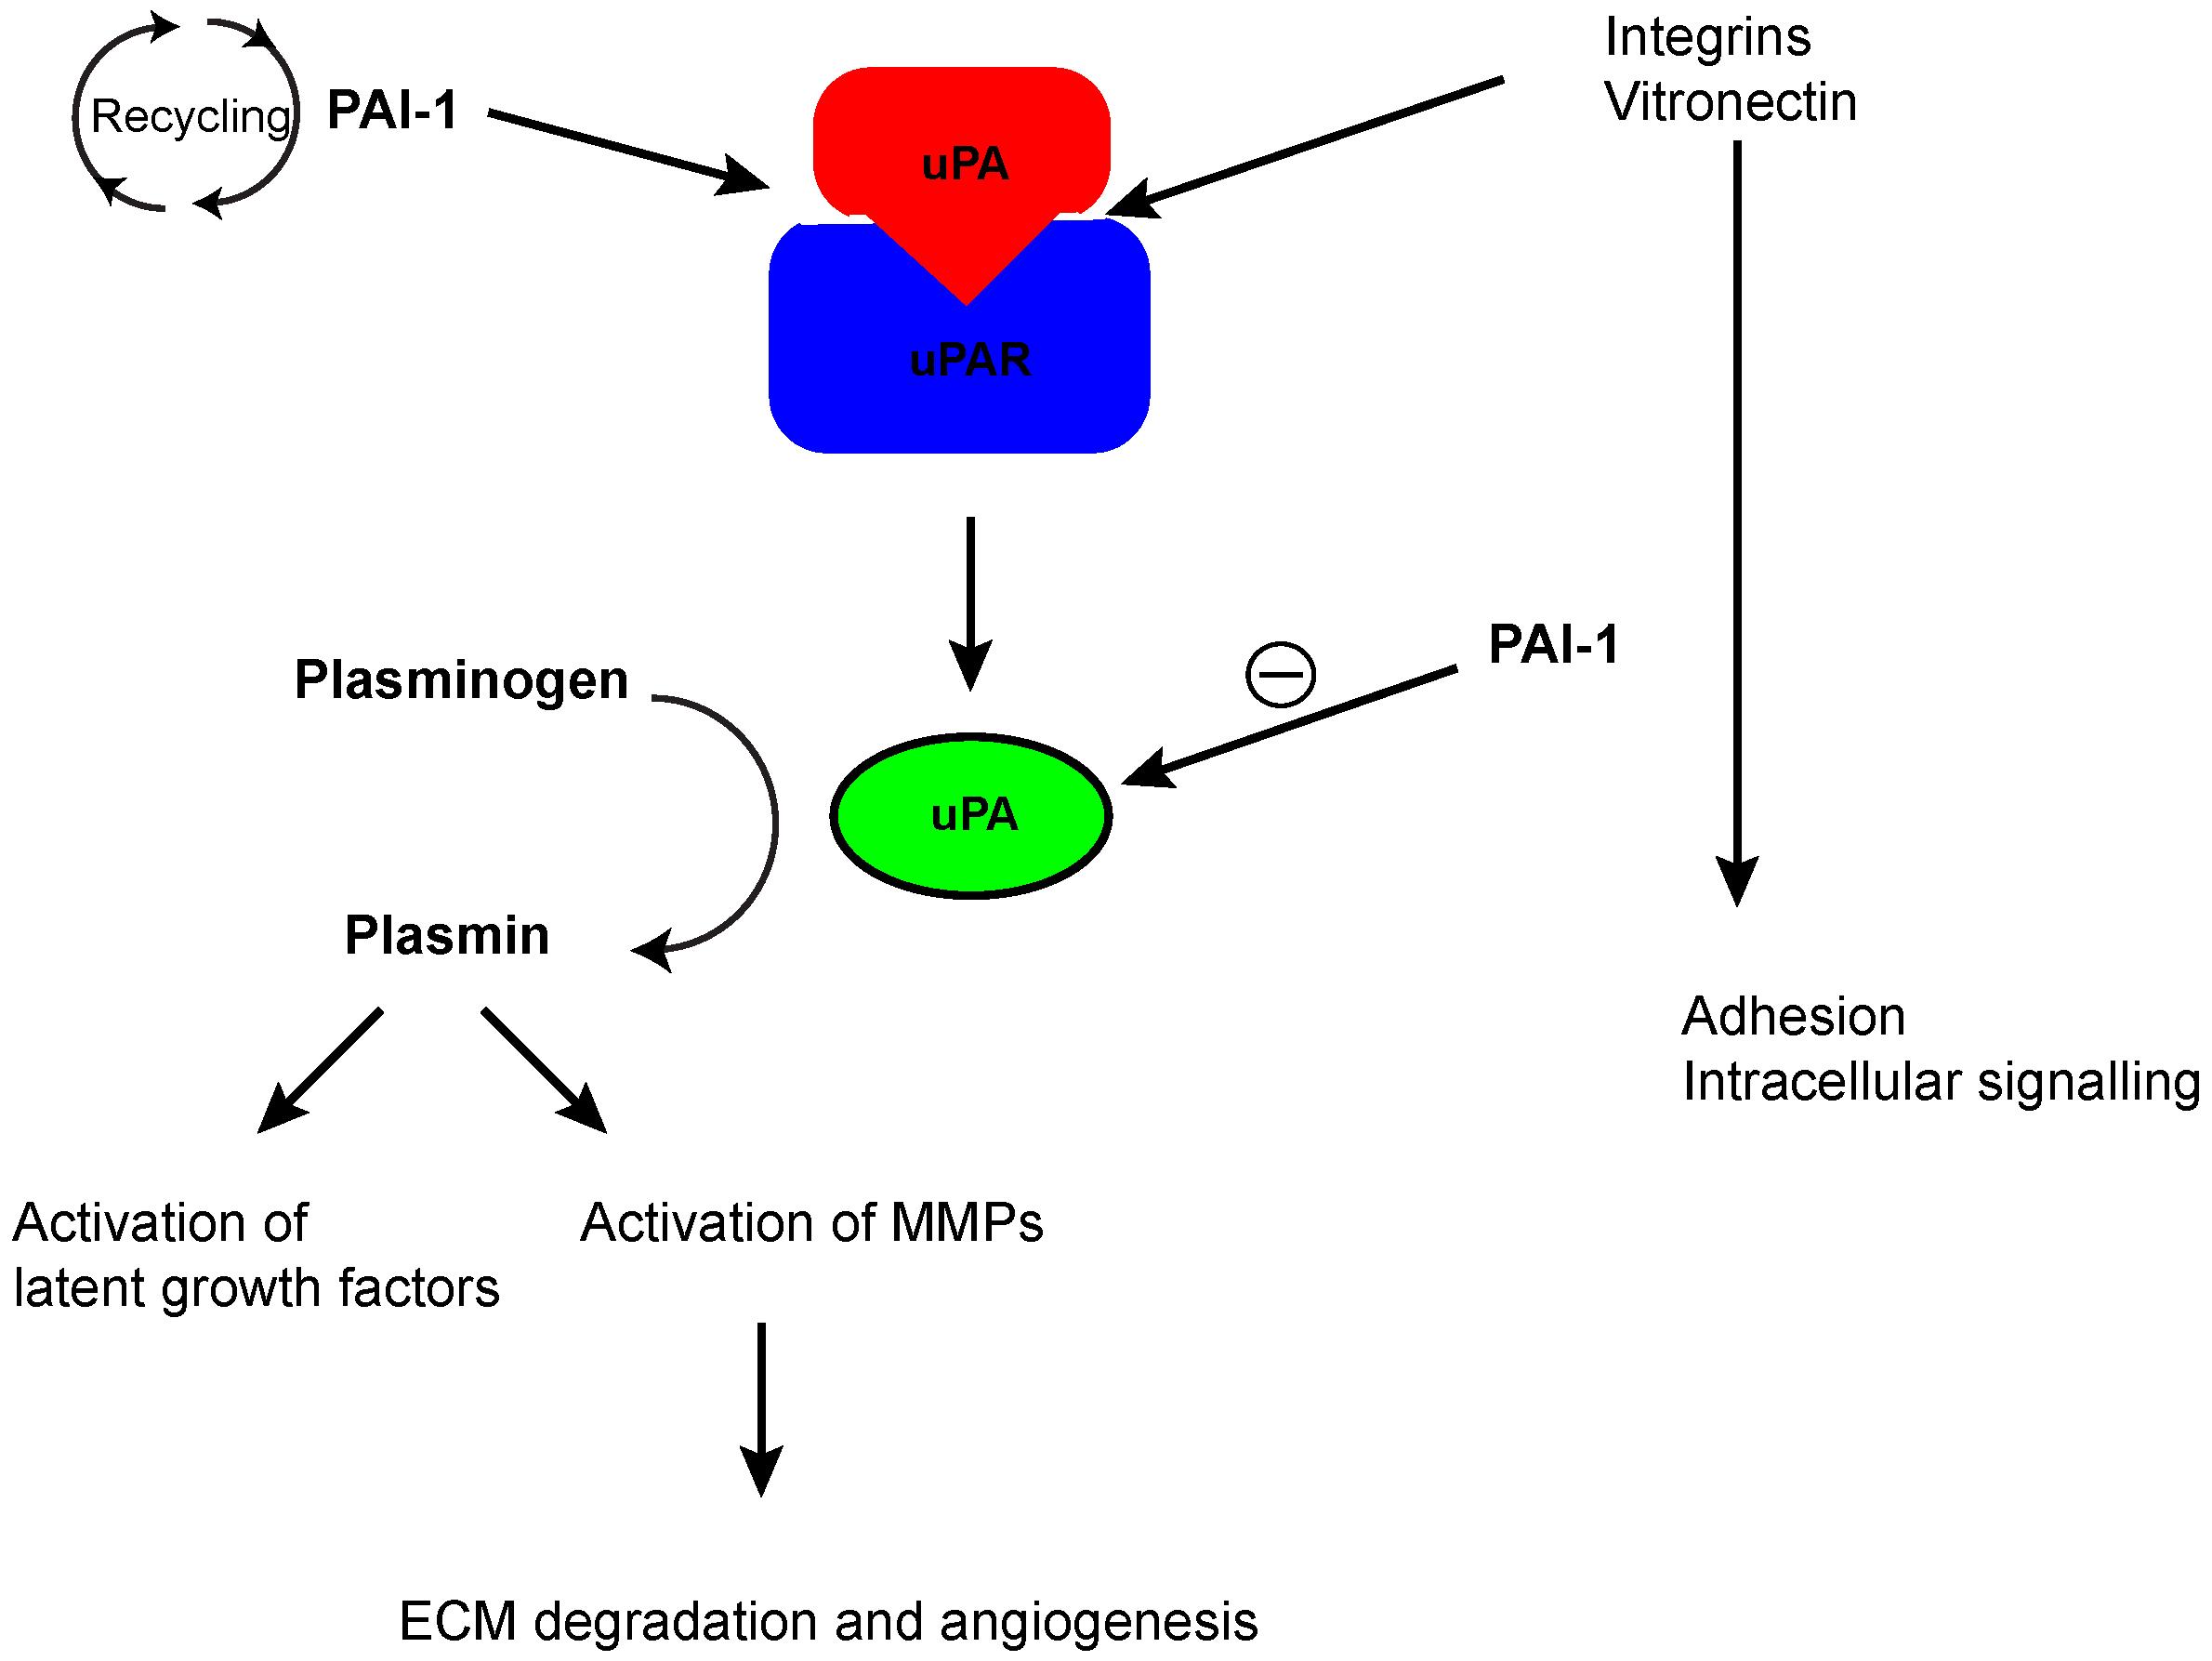 Pai 1 4g 4g. Ингибитор активатора плазминогена 1 типа. Активация плазминогена. Урокиназный активатор плазминогена. Ингибитор активатора плазминогена [pai] схема применения.